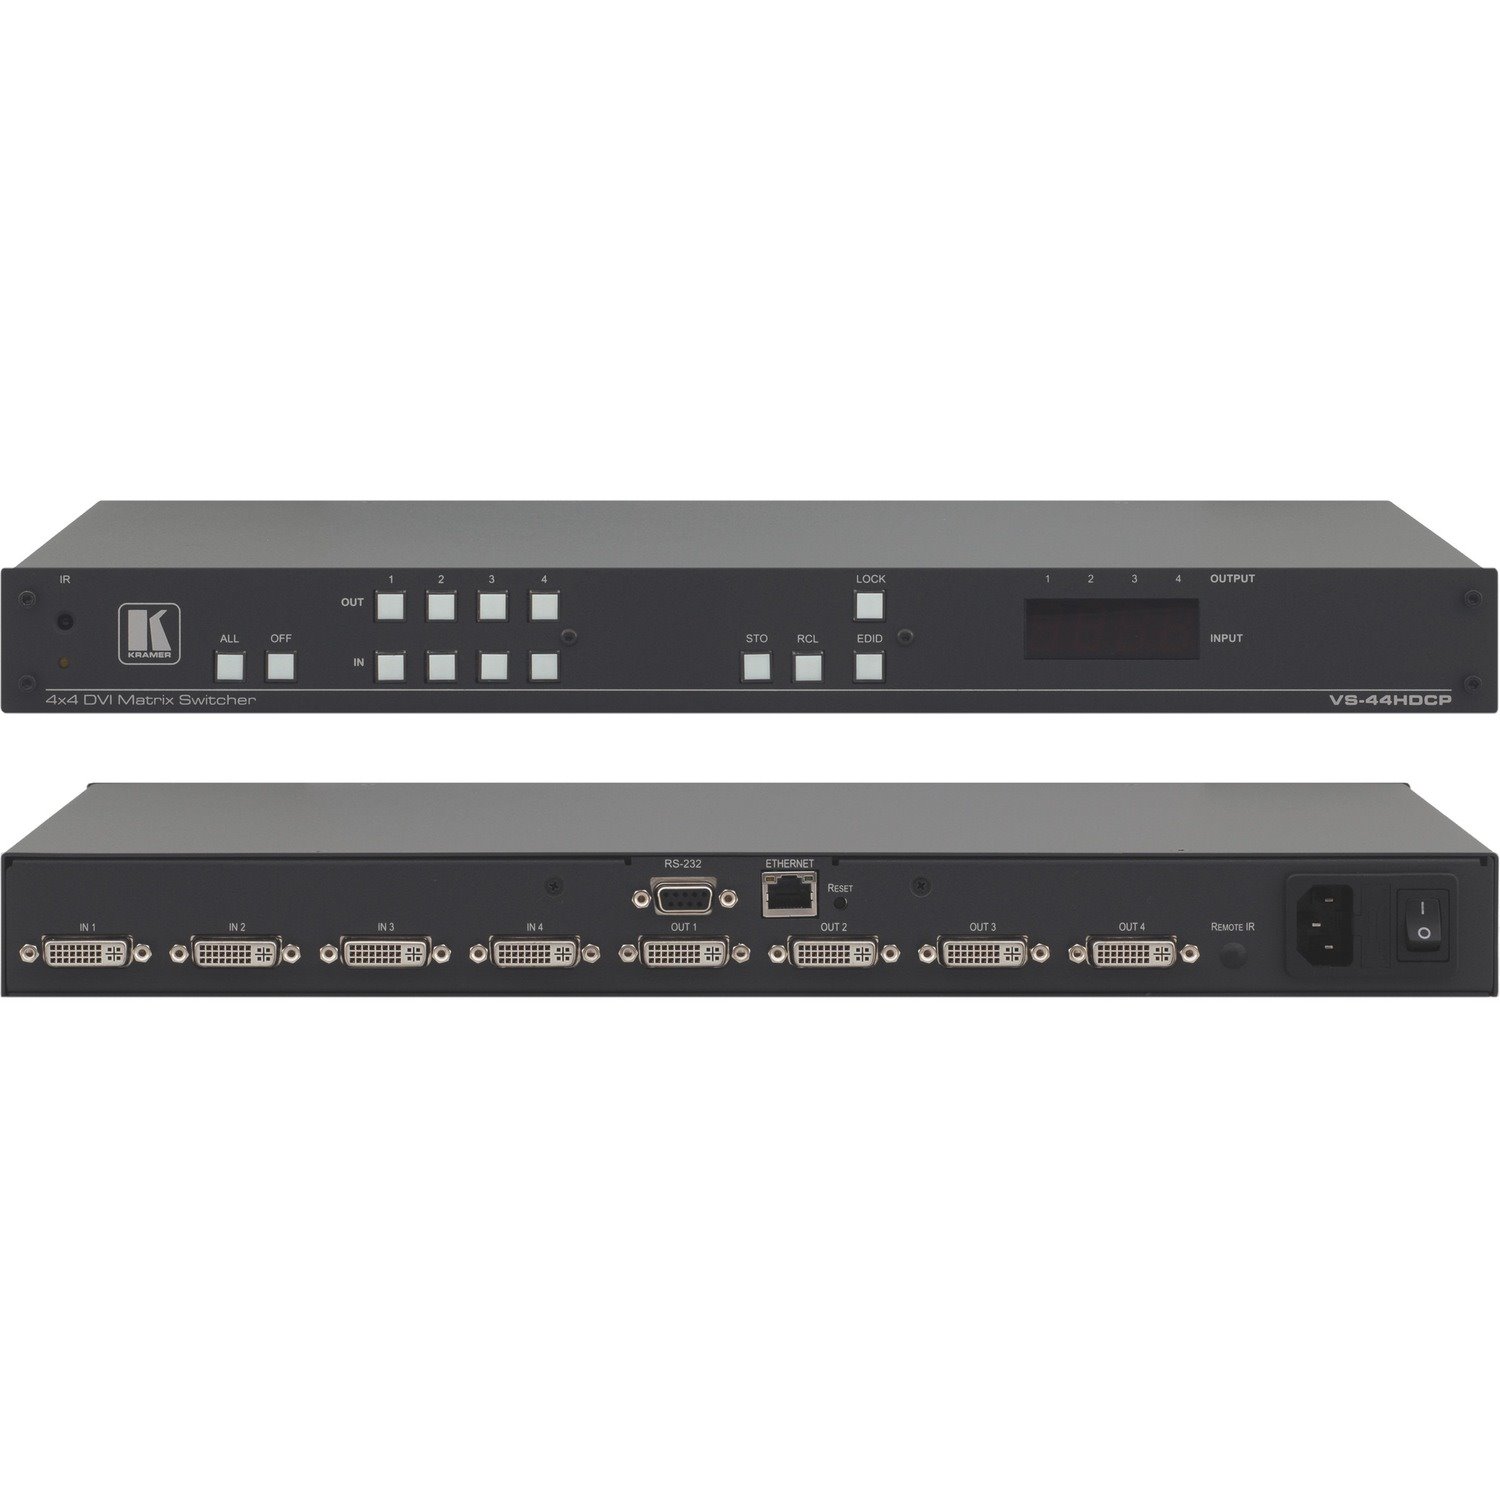 Kramer 4x4 HDCP Compliant DVI Matrix Switcher